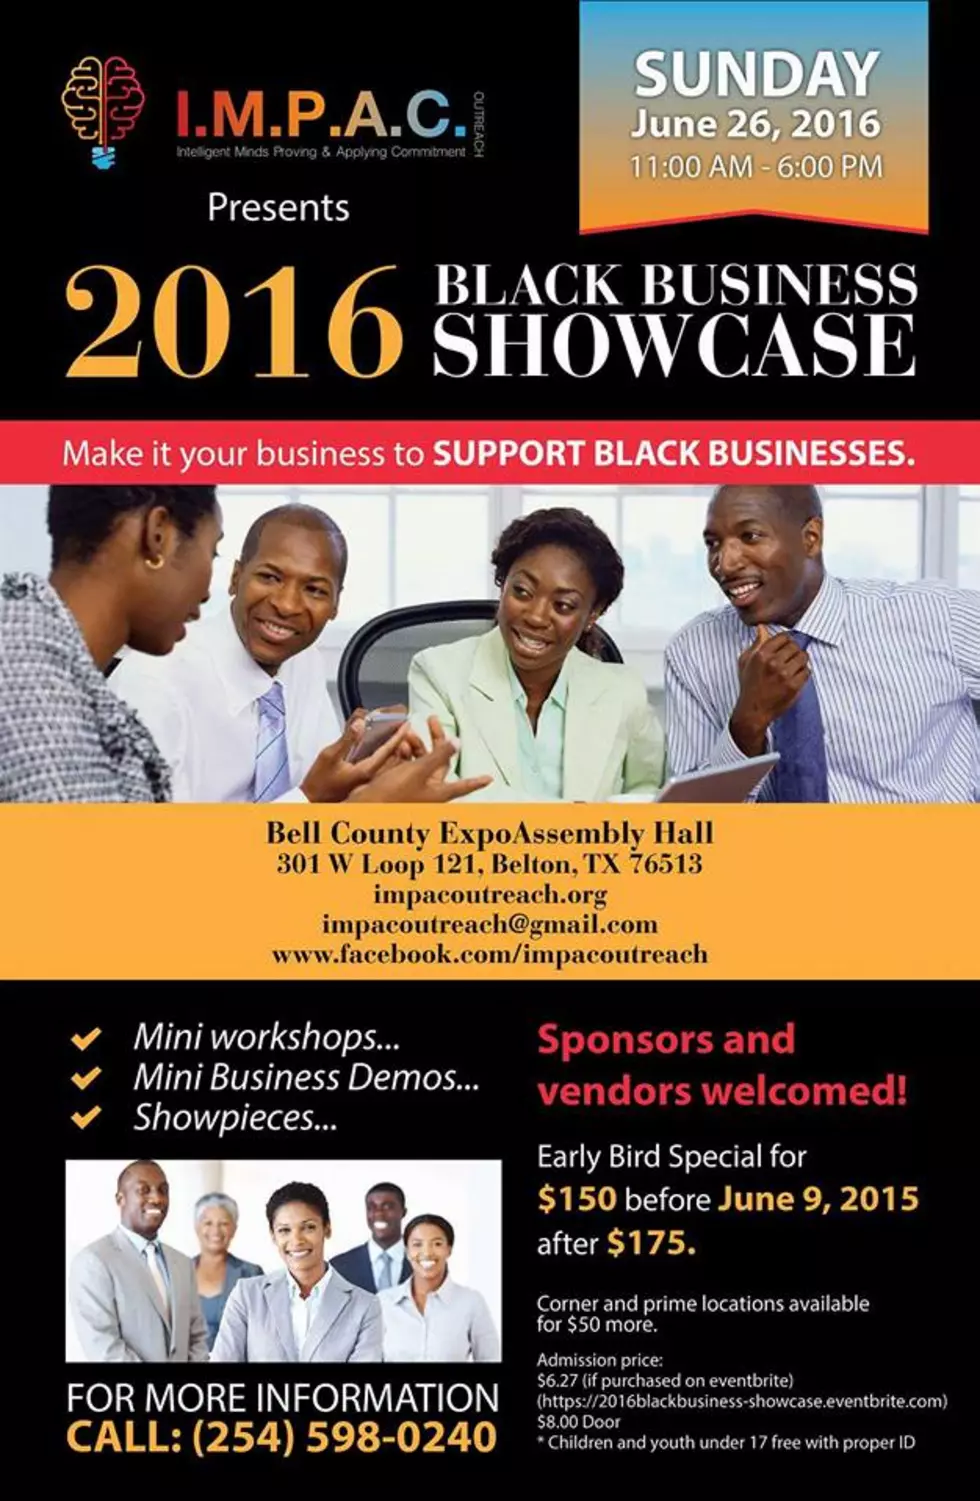 2016 Black Business Showcase This Weekend In Belton